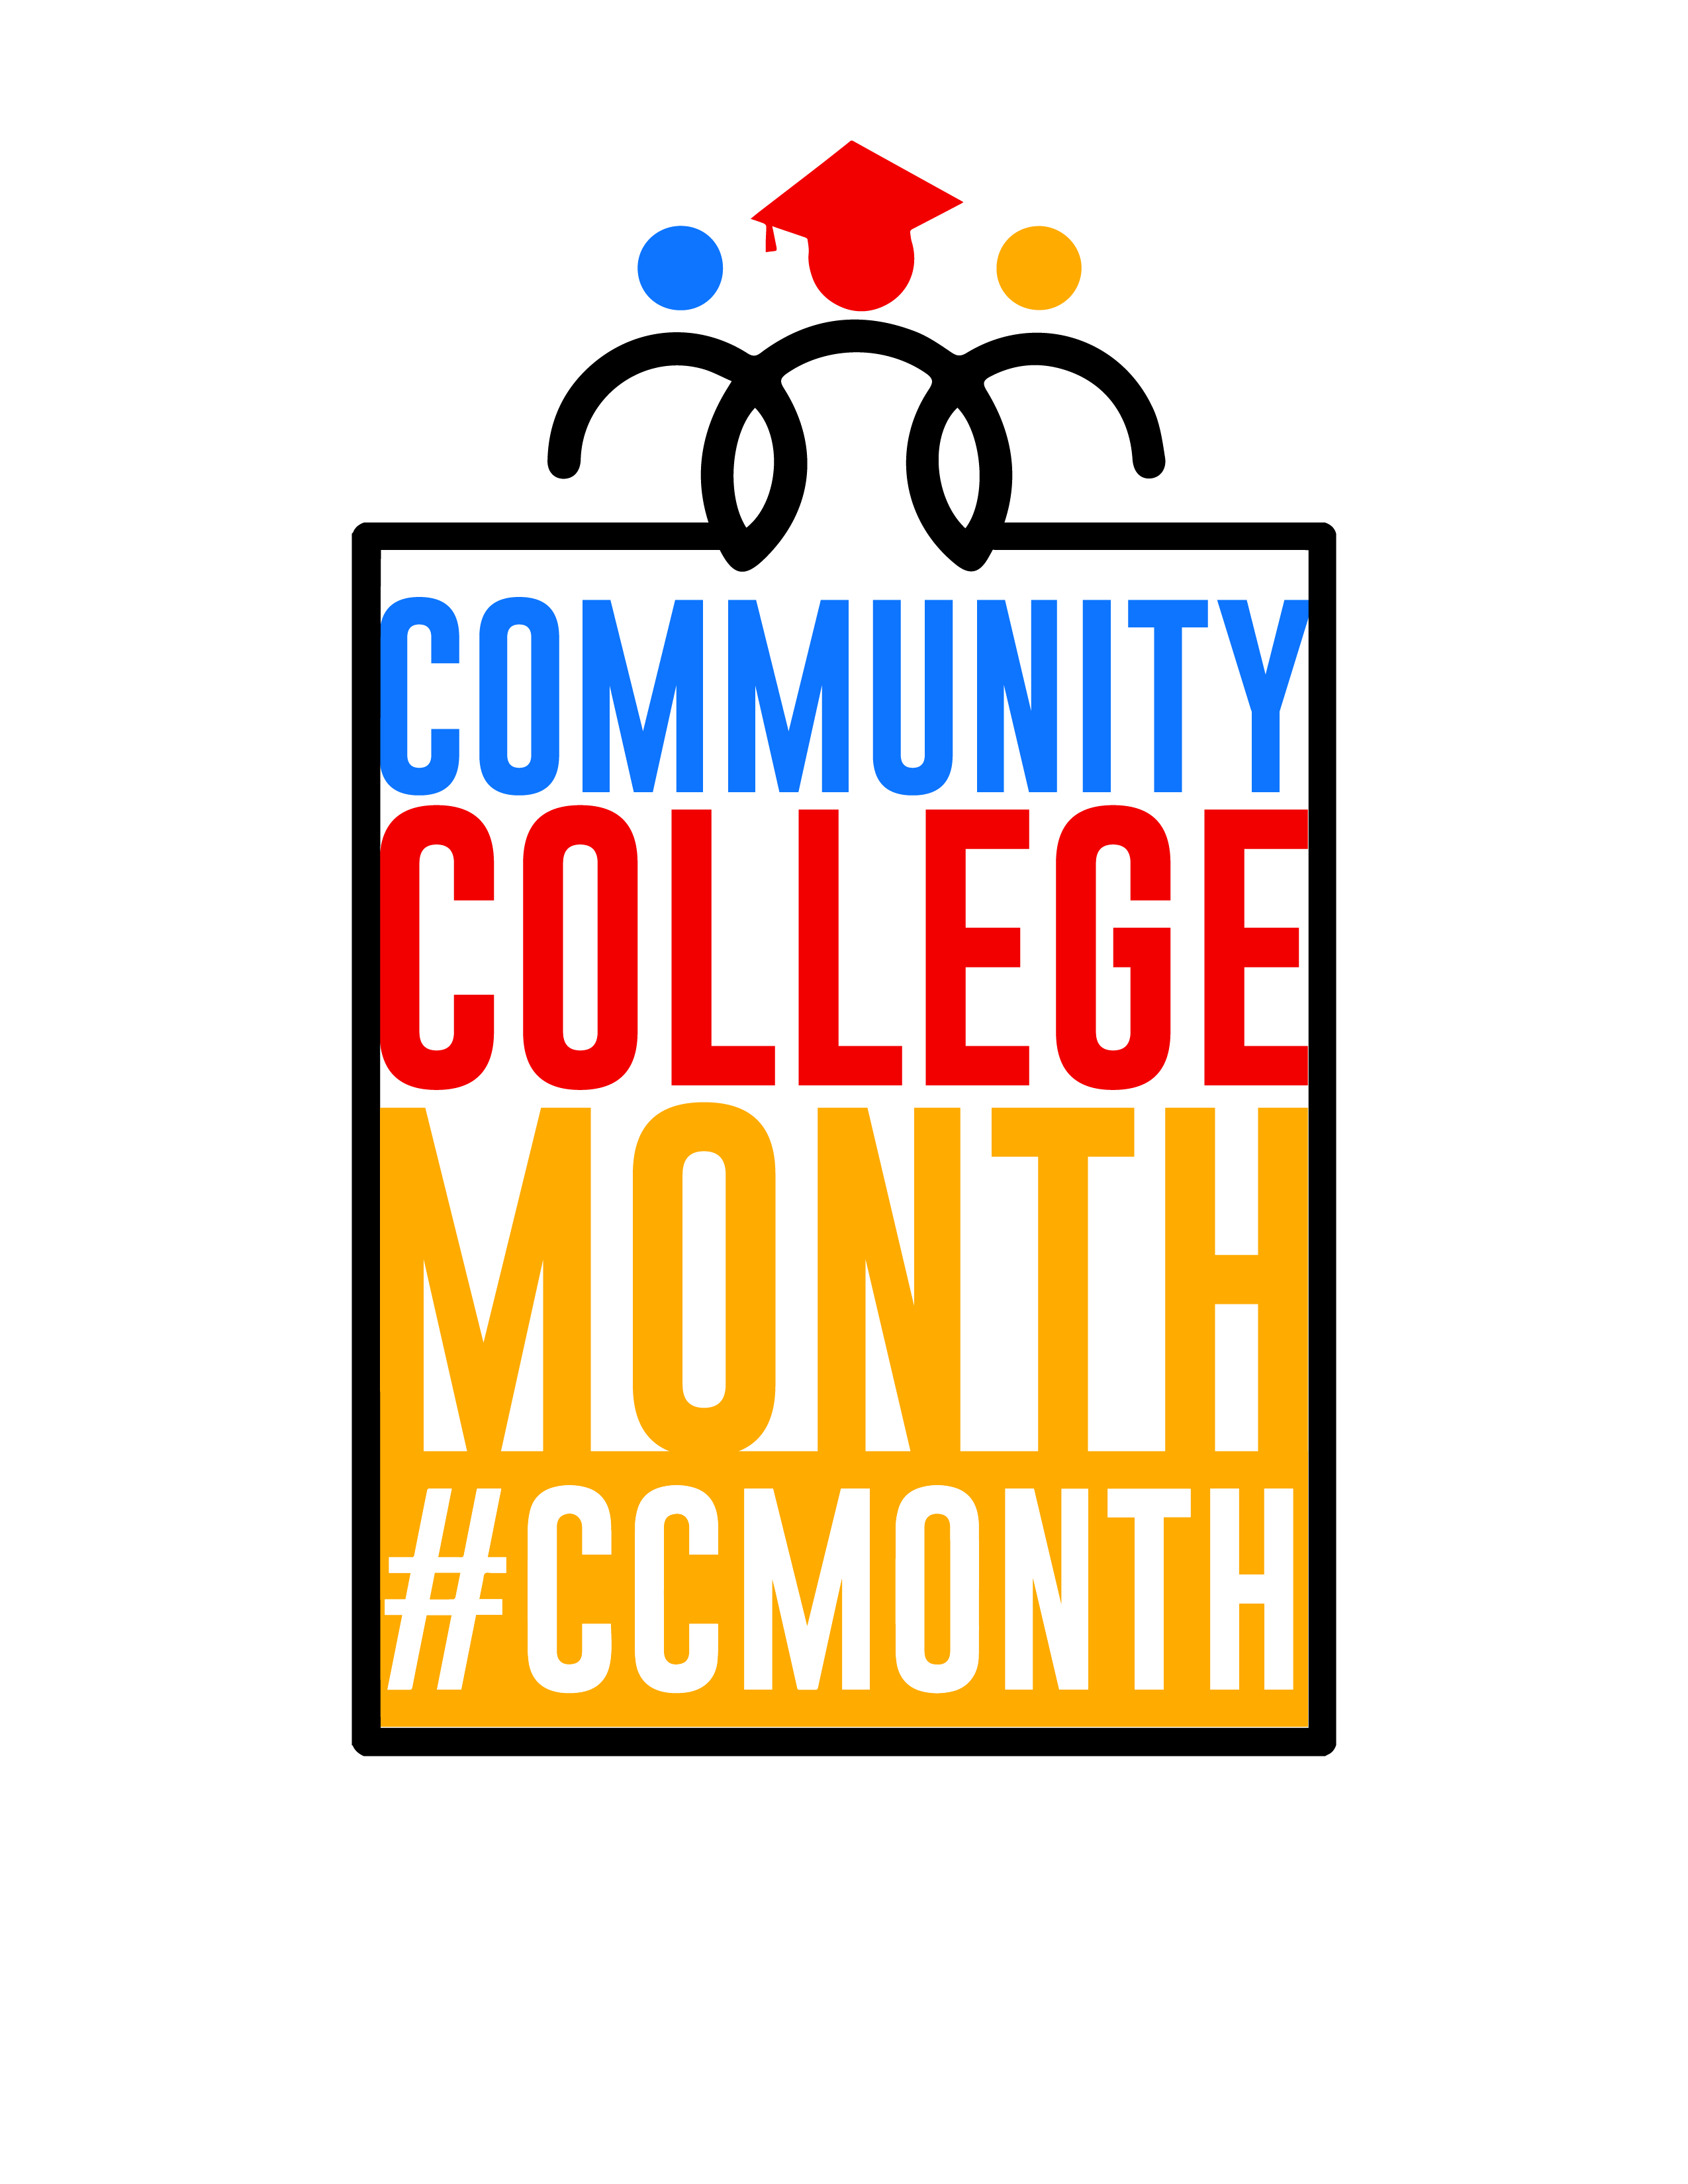 Community College Month Logo designed by Quantanik Norton